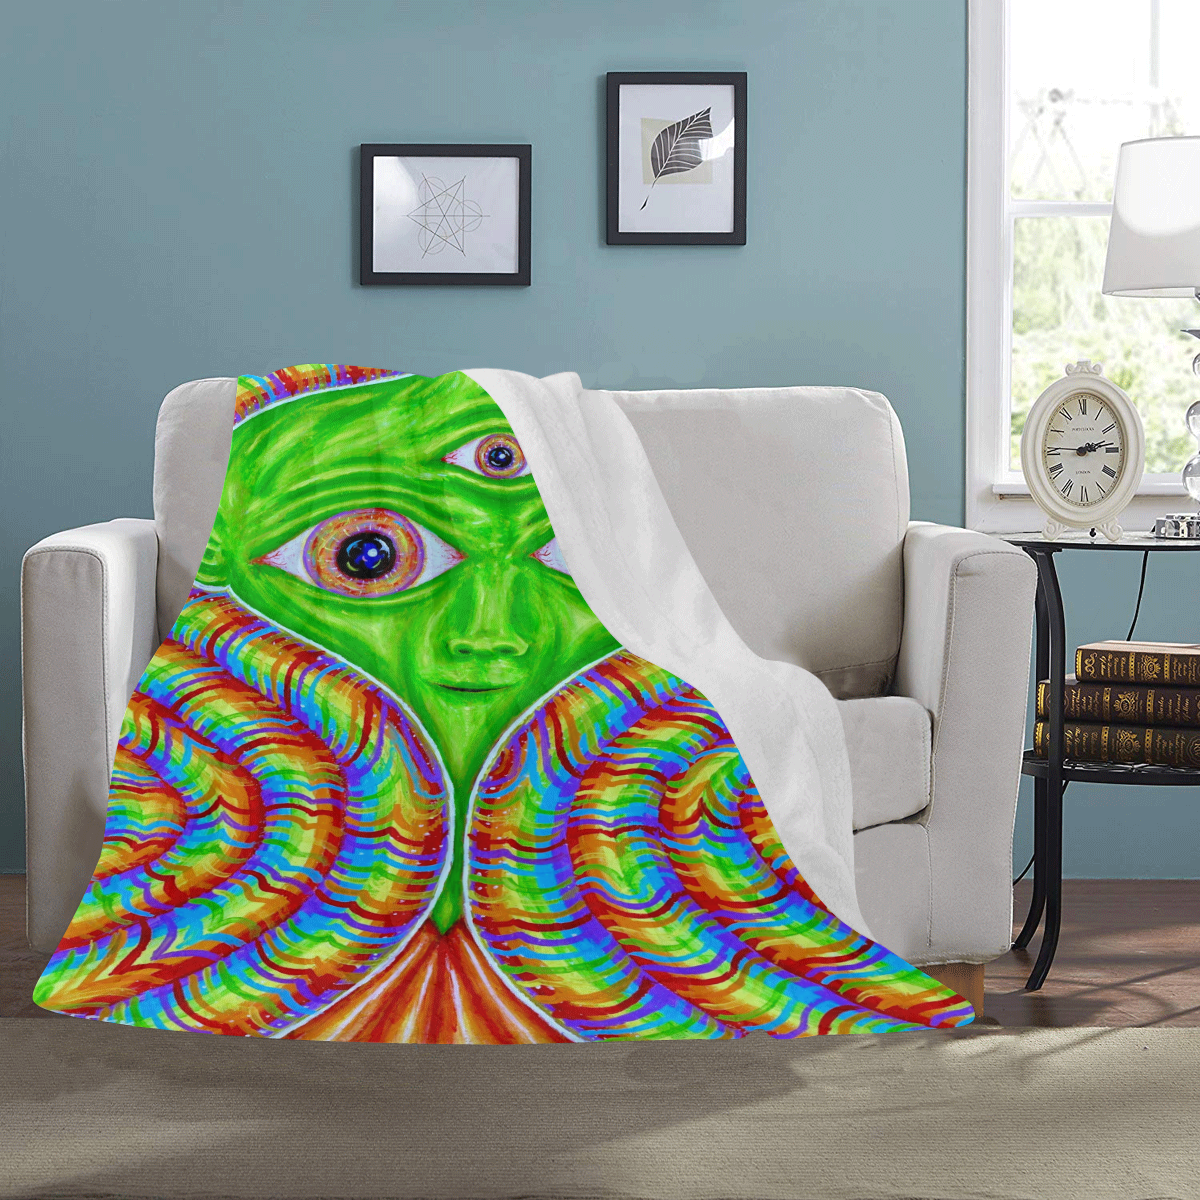 Portrait of an Alien Looking at Sound Ultra-Soft Micro Fleece Blanket 50"x60"